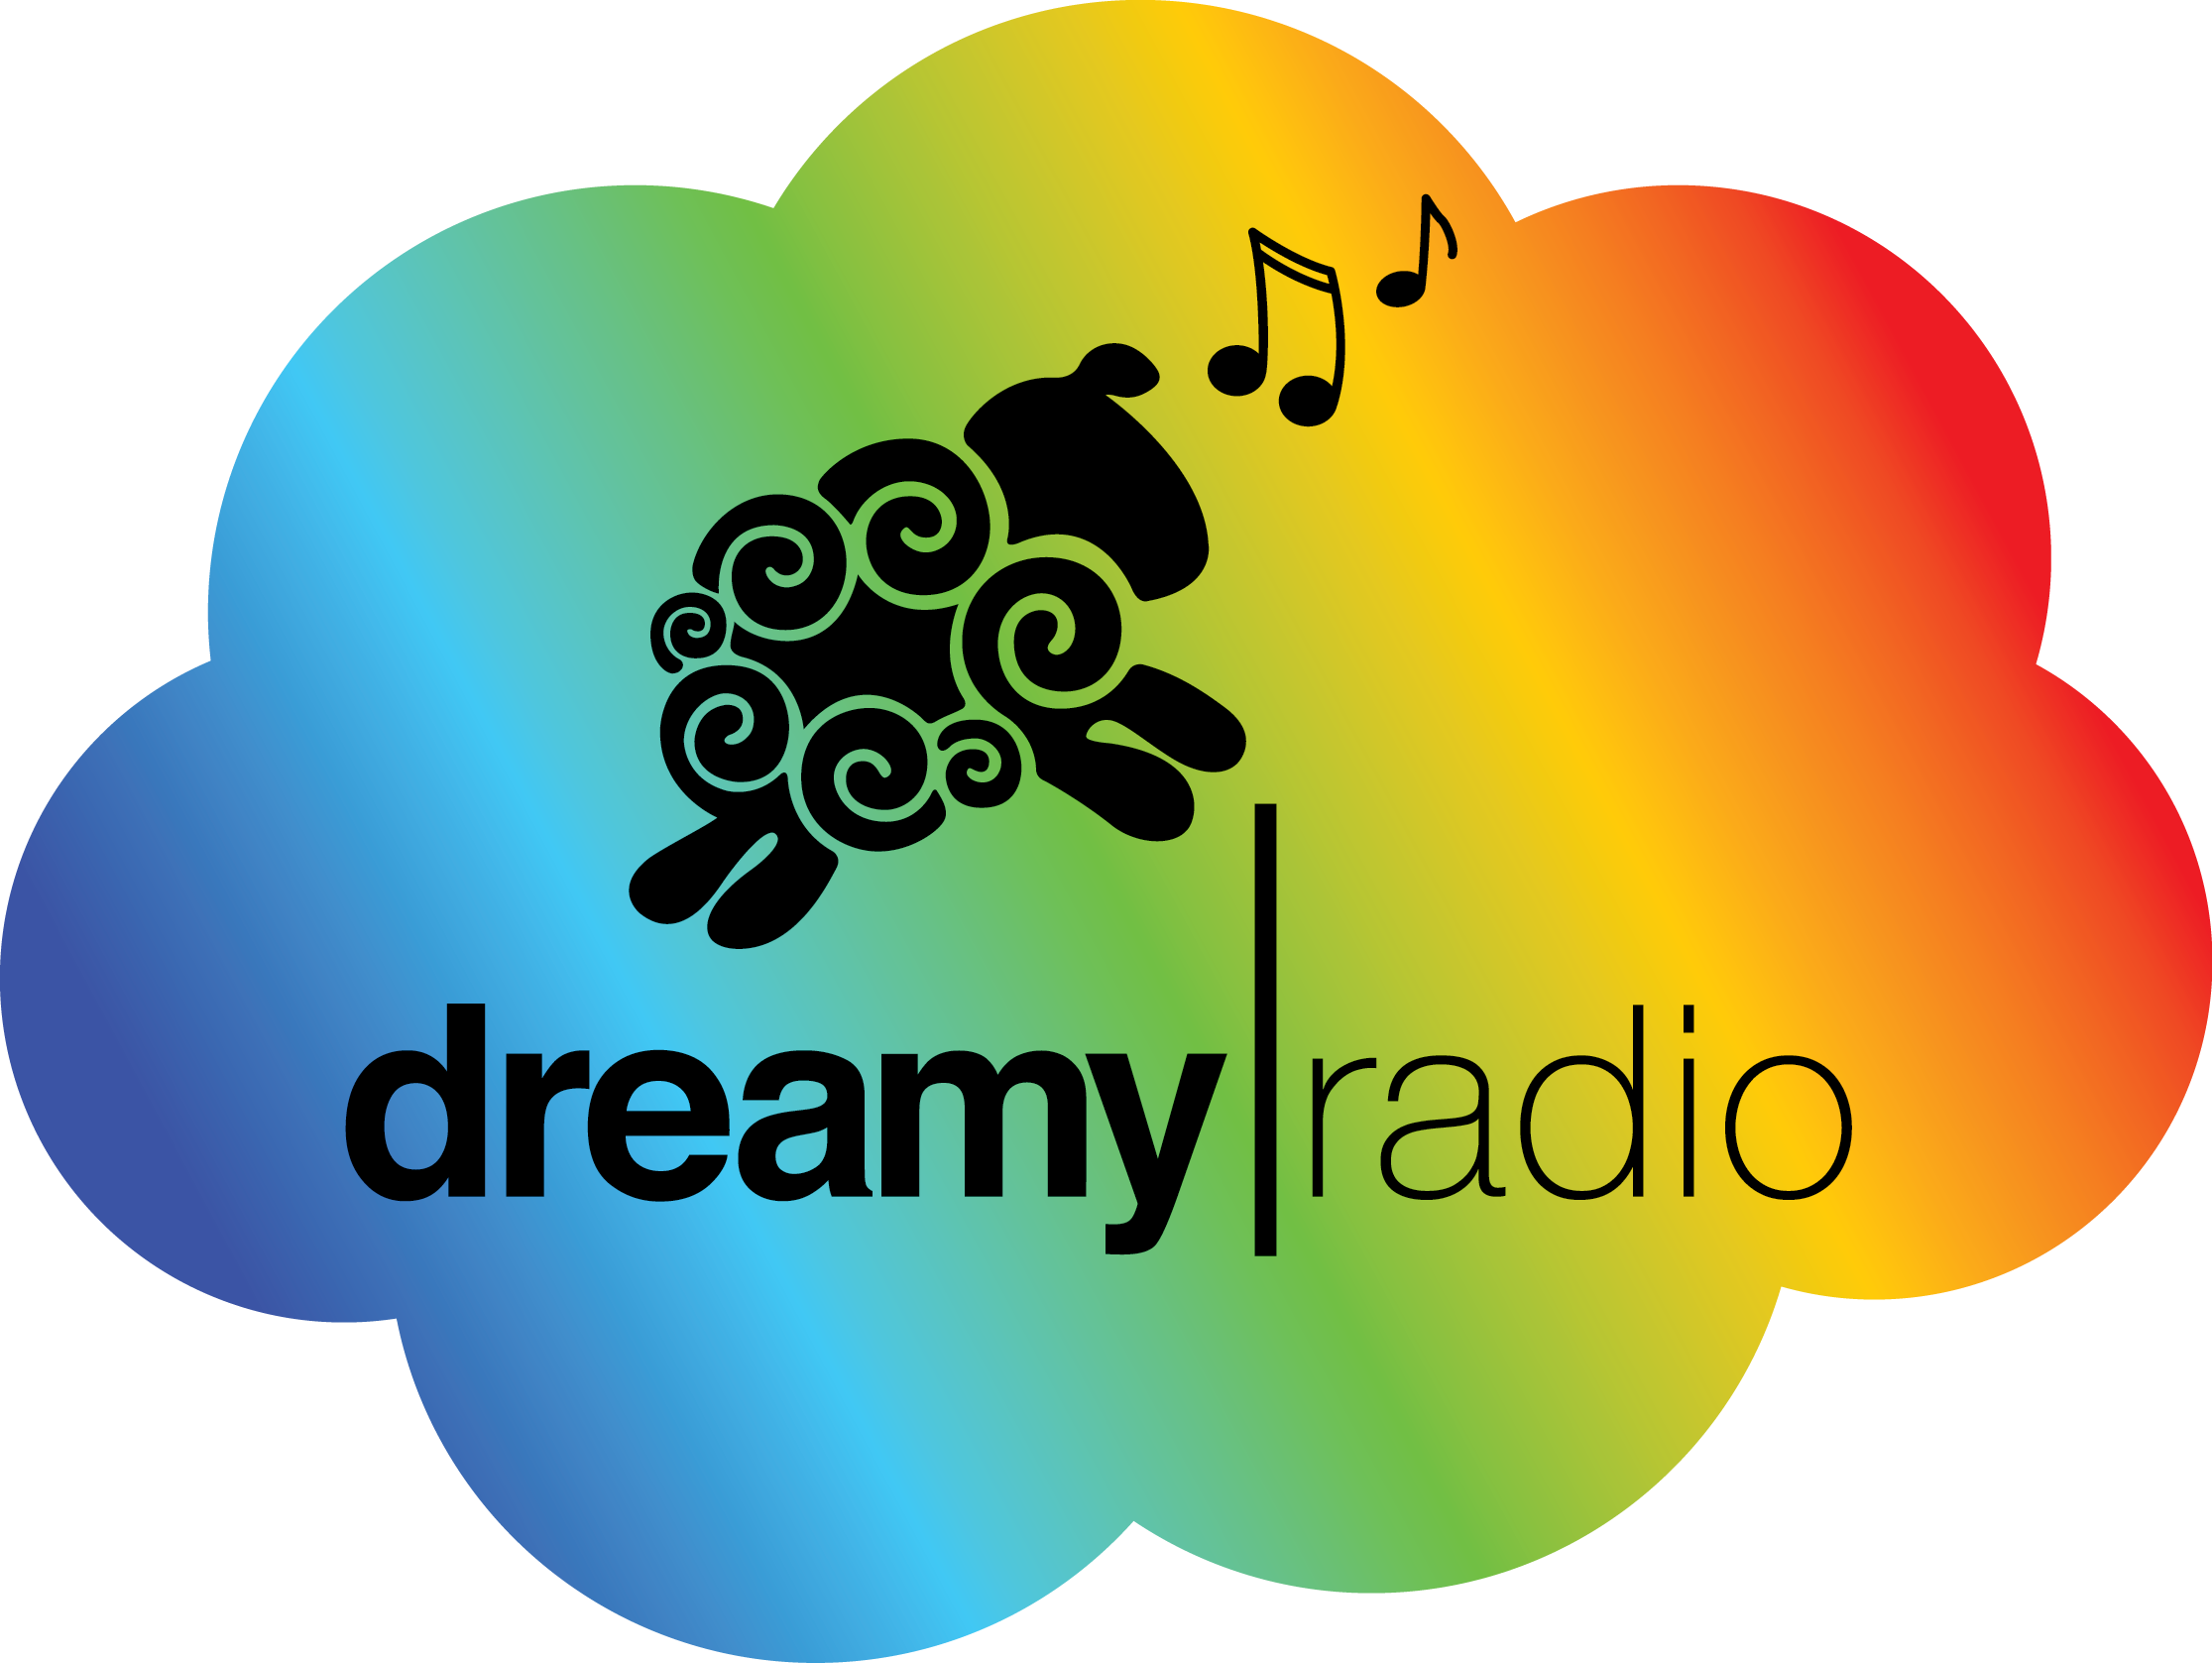 Dreamy Radio